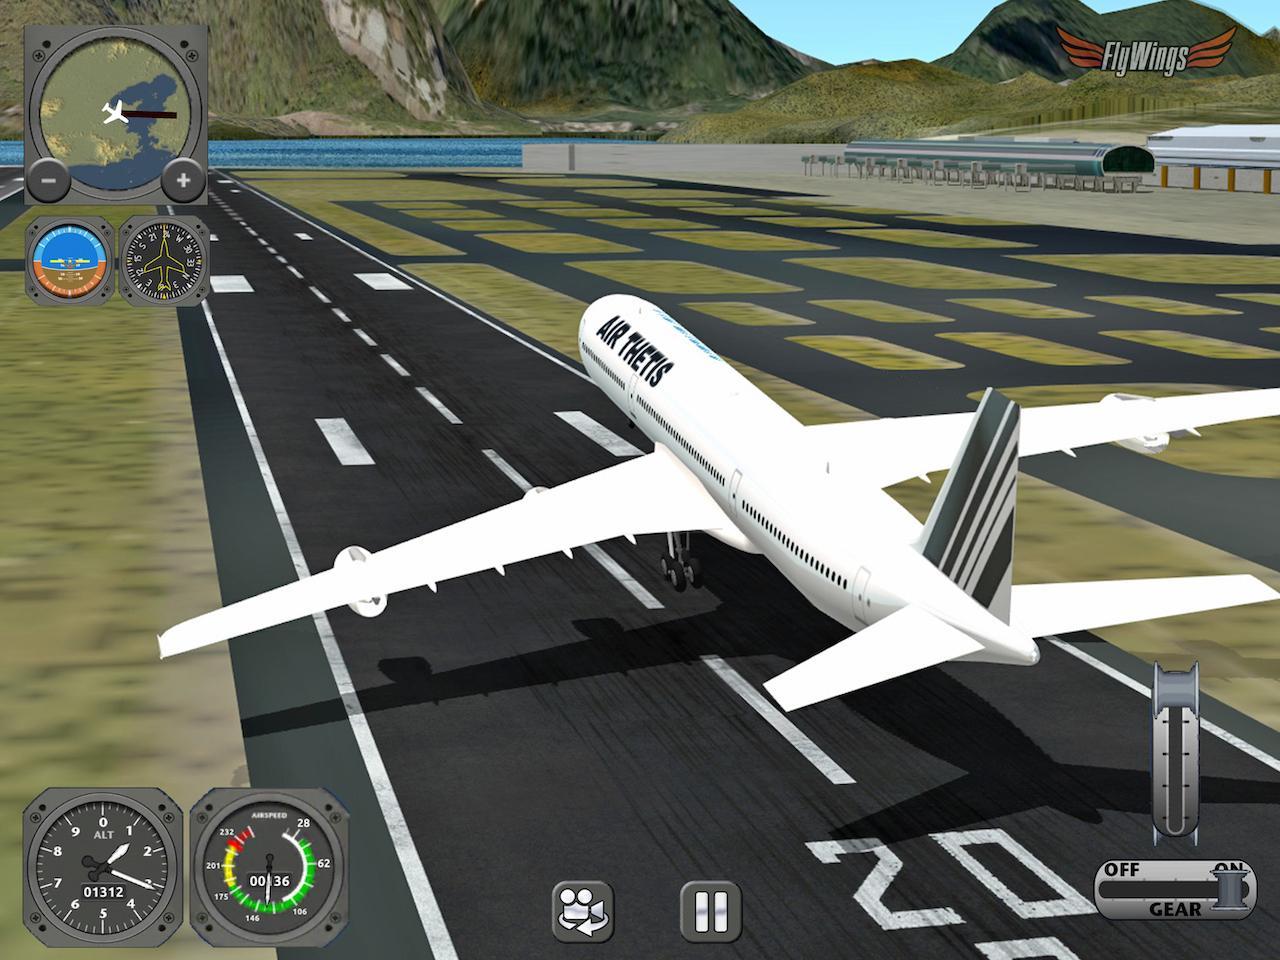 Flight Simulator 2013 Flywings Rio De Janeiro For Android Apk Download - roblox flight simulator 2013